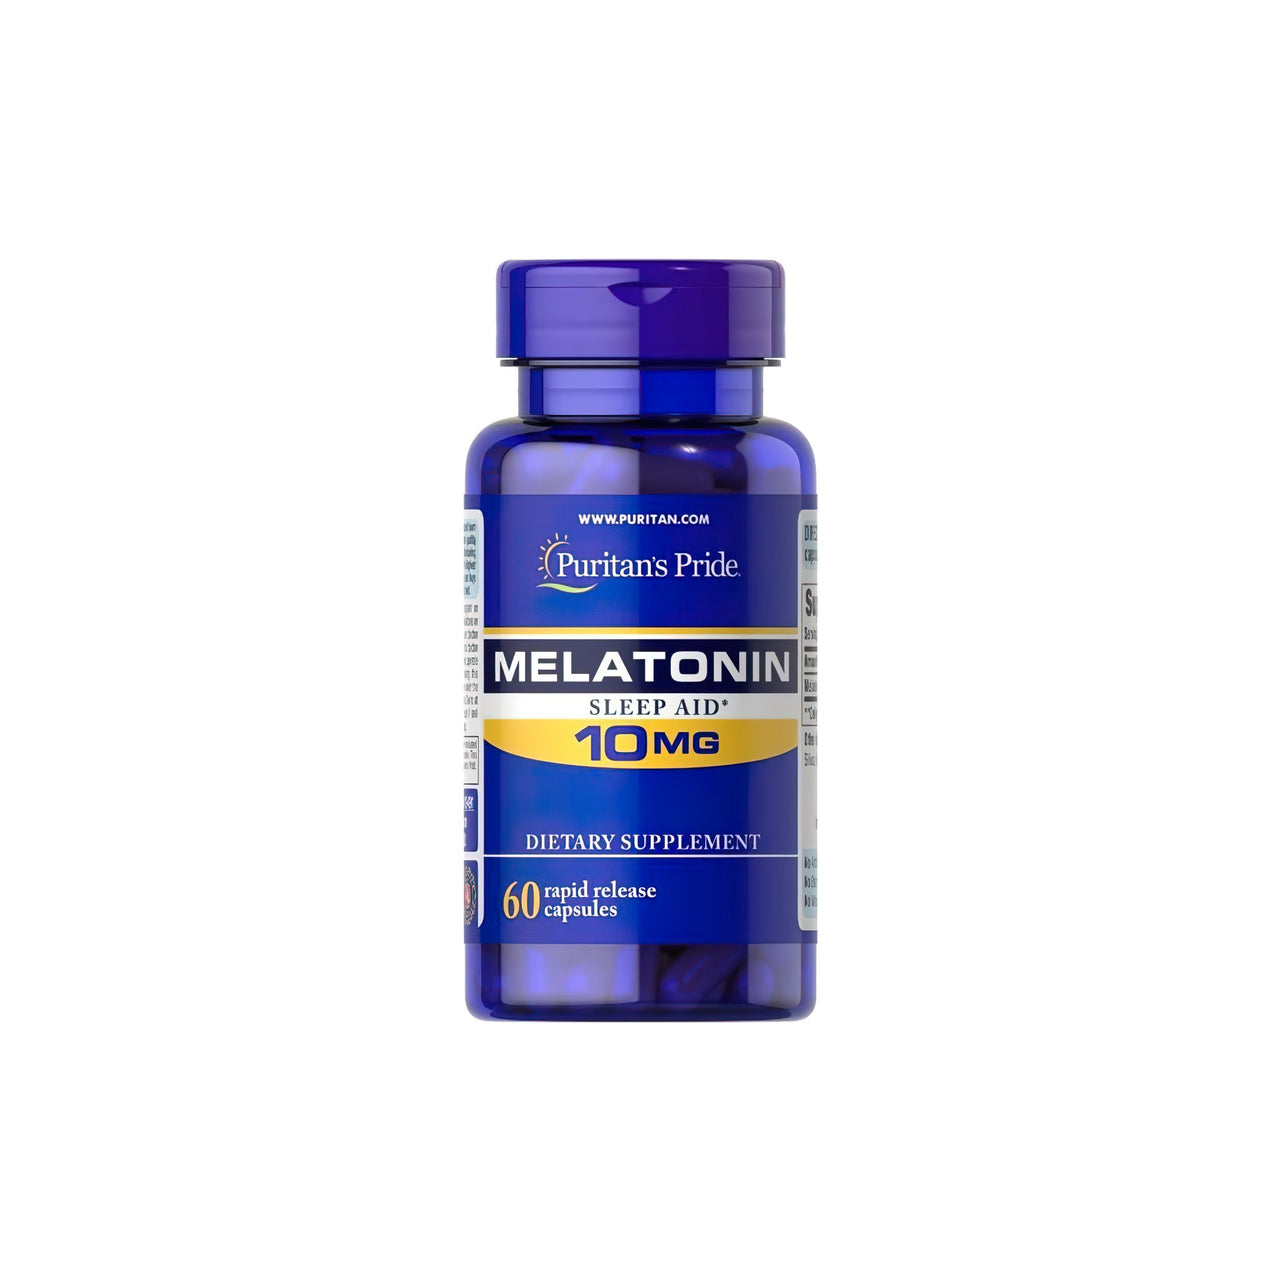 Puritan's Pride Melatonin 10 mg 60 schnell freisetzende Kapseln.